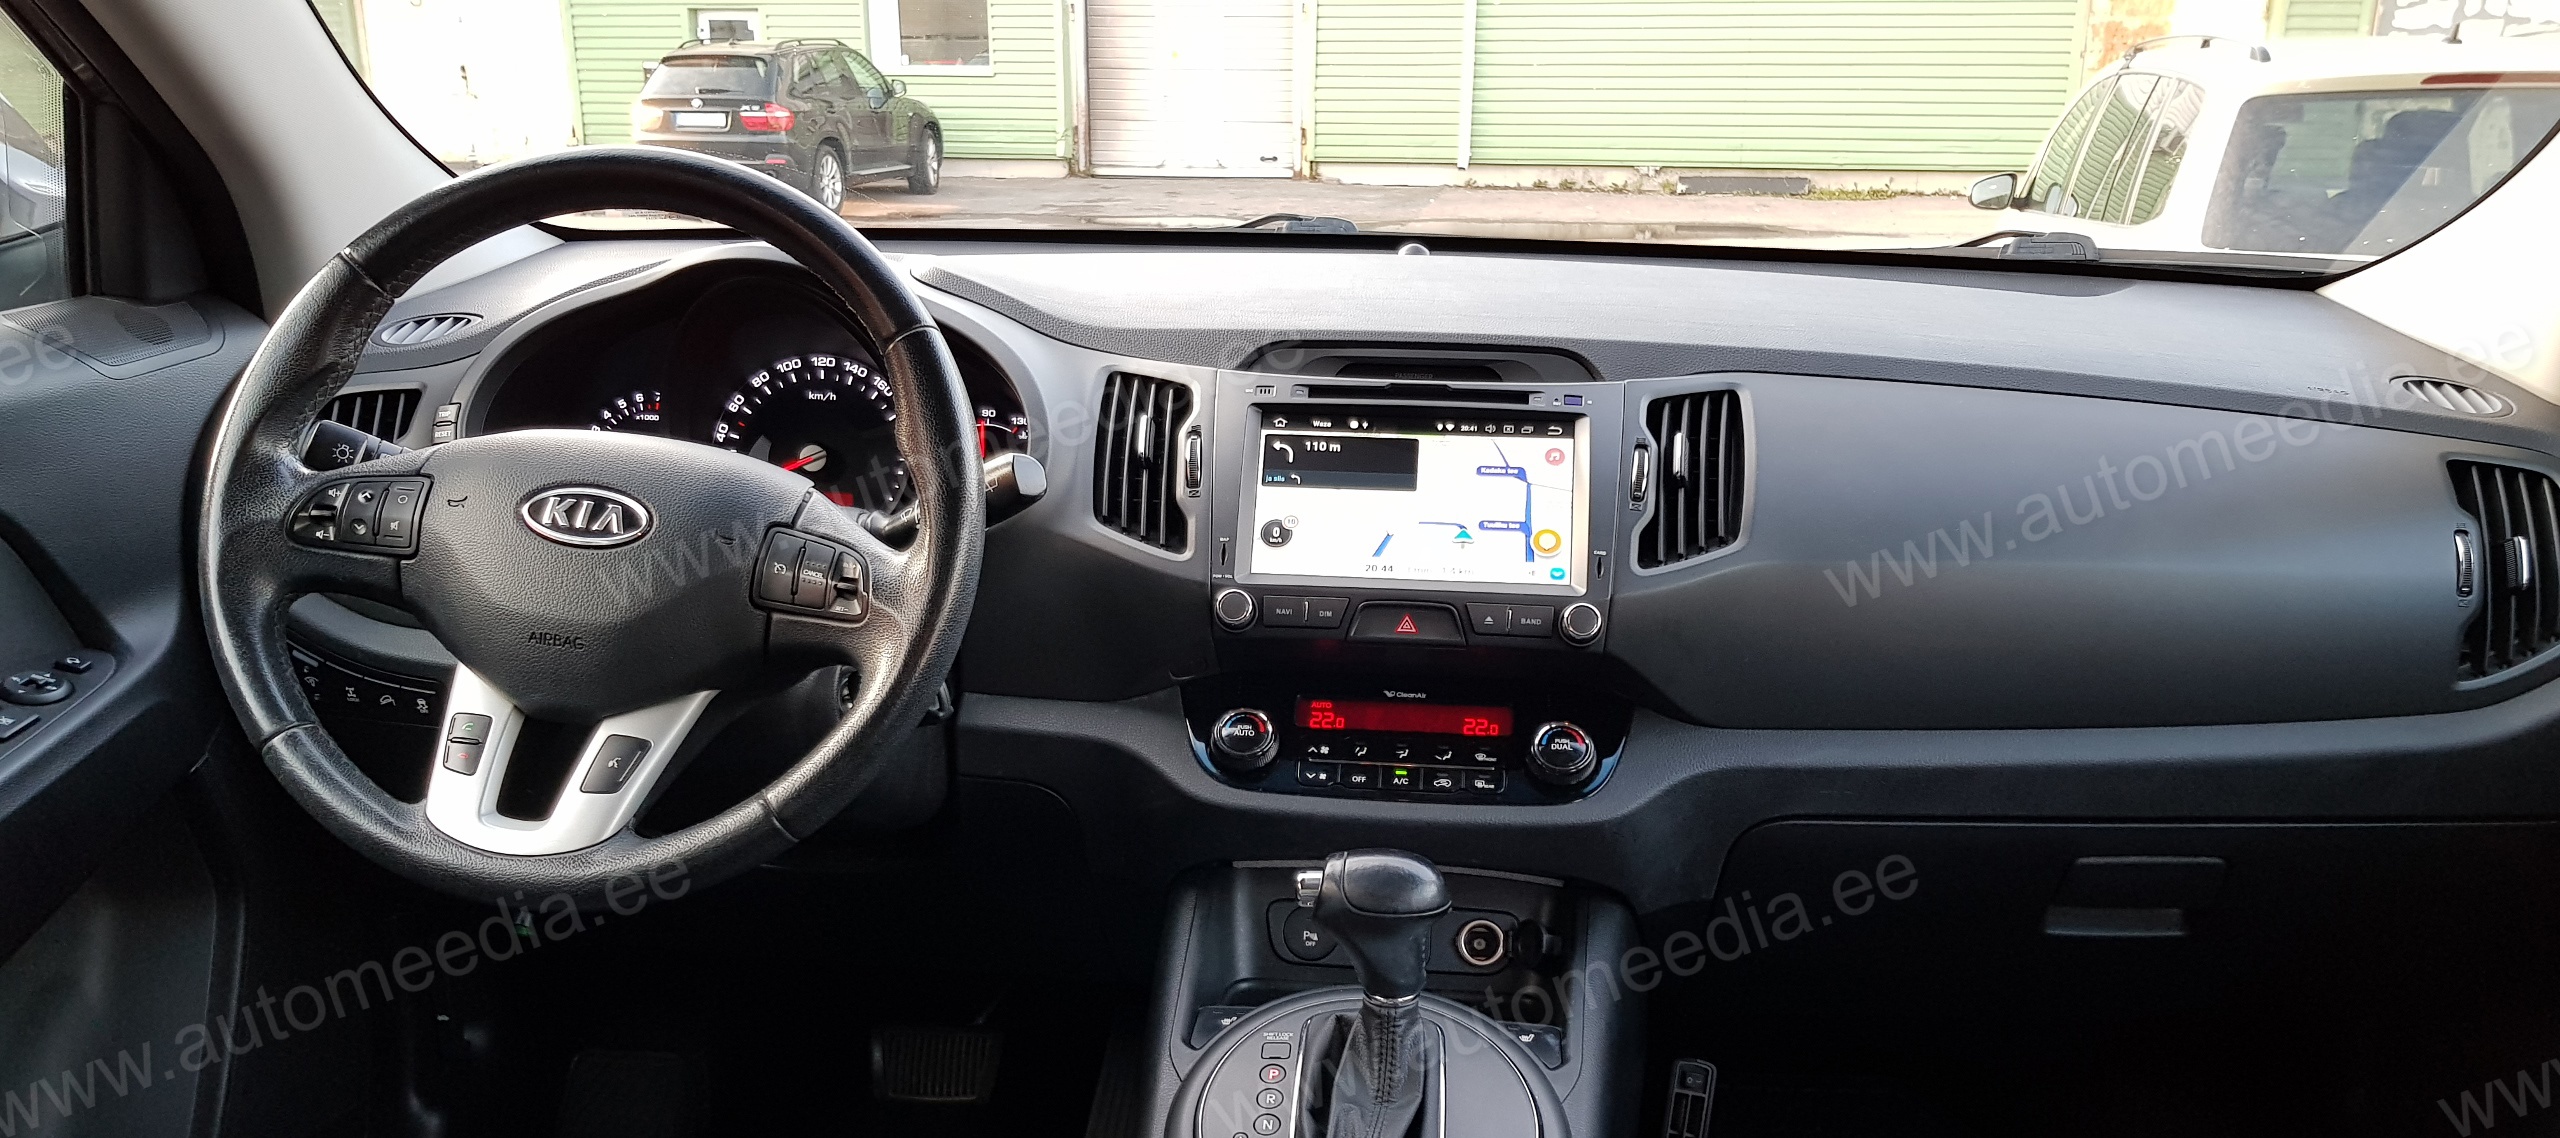 KIA SPORTAGE (2010-2015)  Automedia RVT5743 Car multimedia GPS player with Custom Fit Design